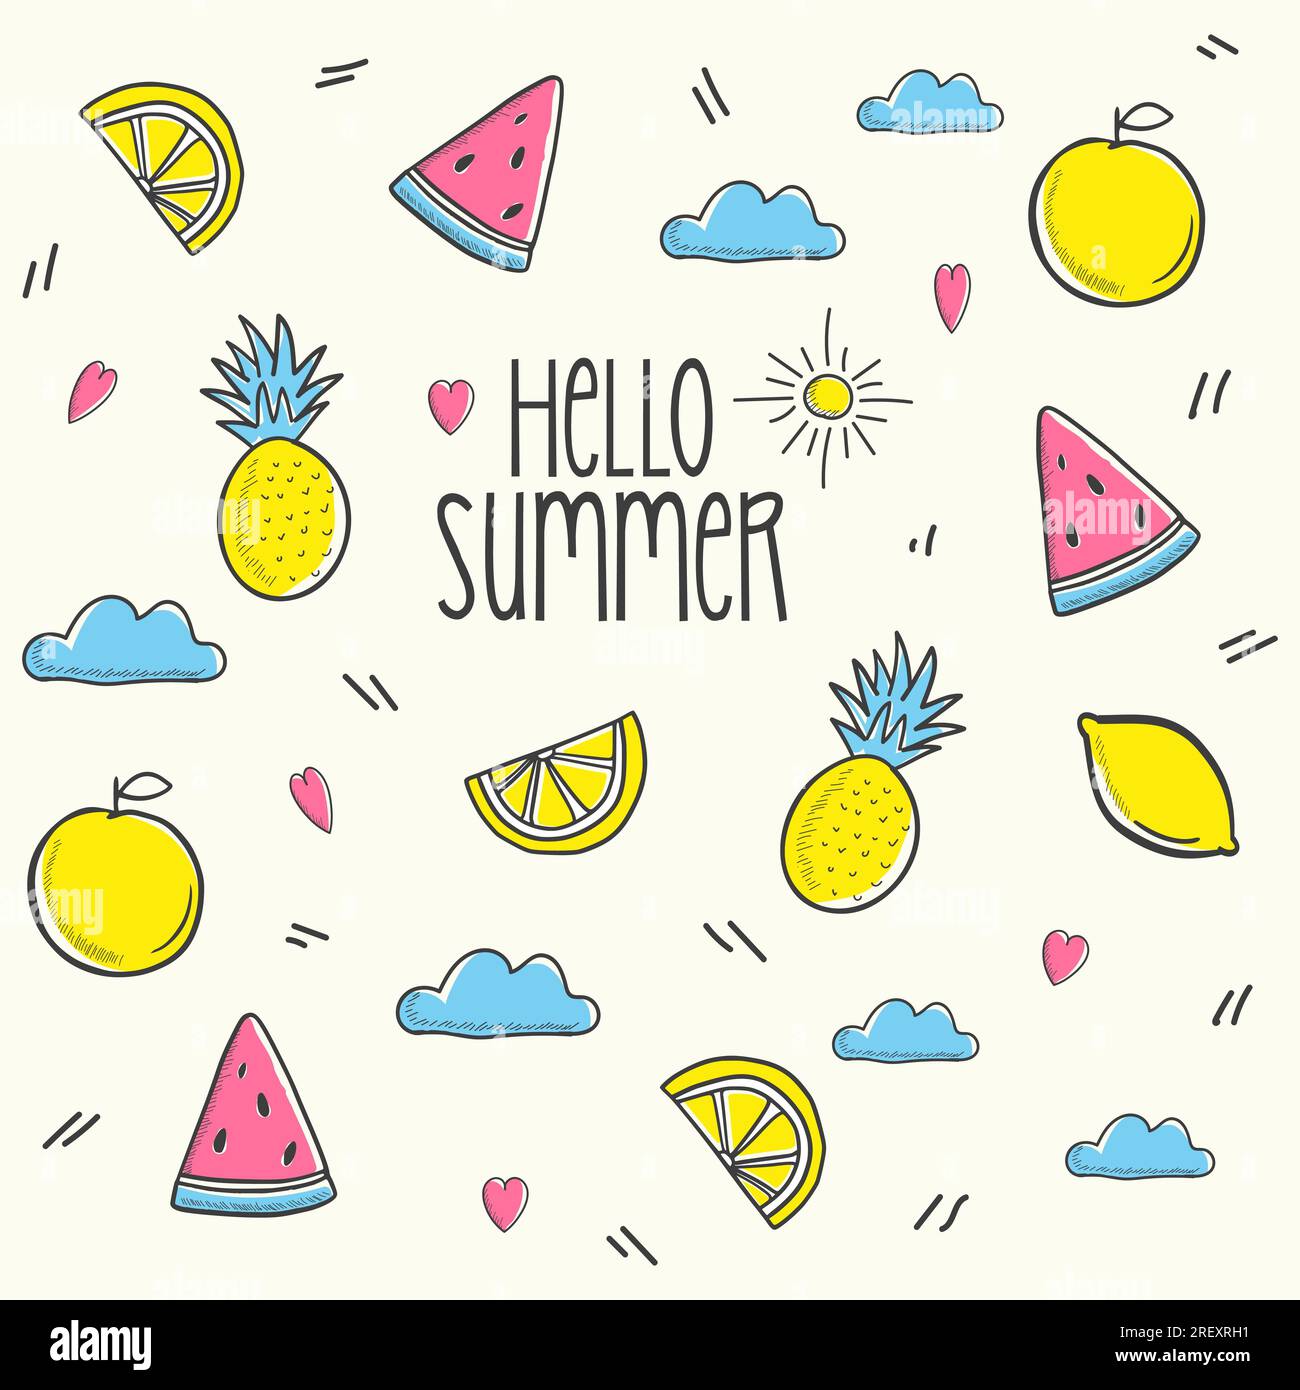 Fruits vector illustration with watermelon banana lemon and orange. Hand drawn Stock Vector